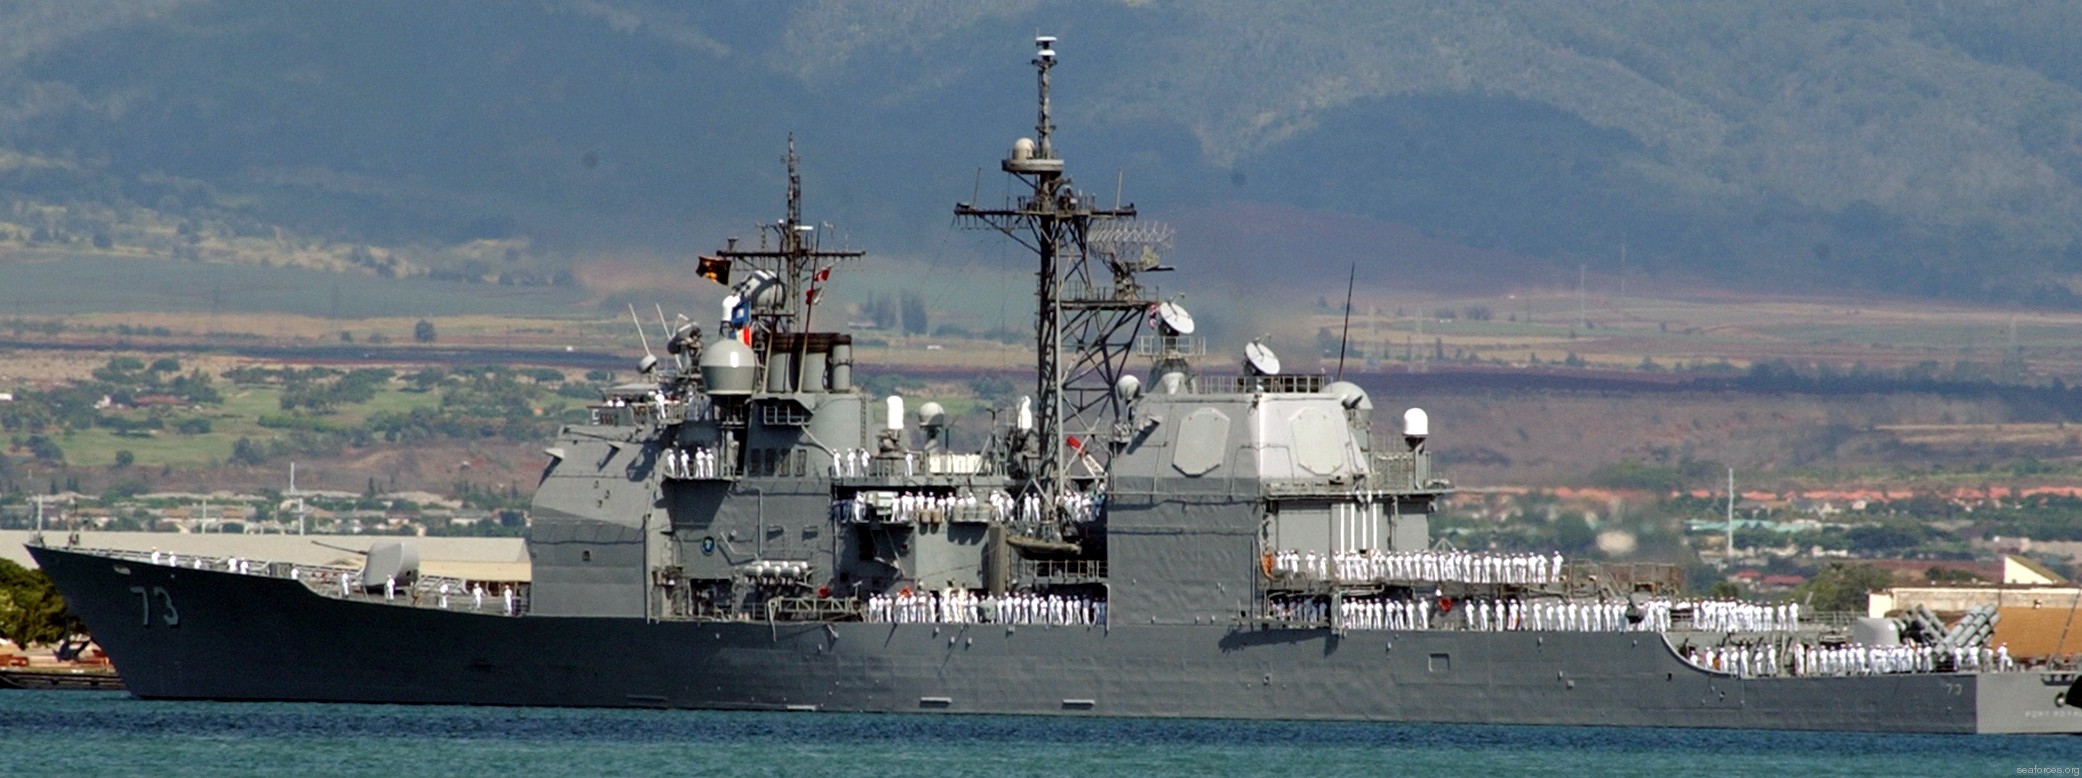 cg-73 uss port royal ticonderoga class guided missile cruiser navy 40